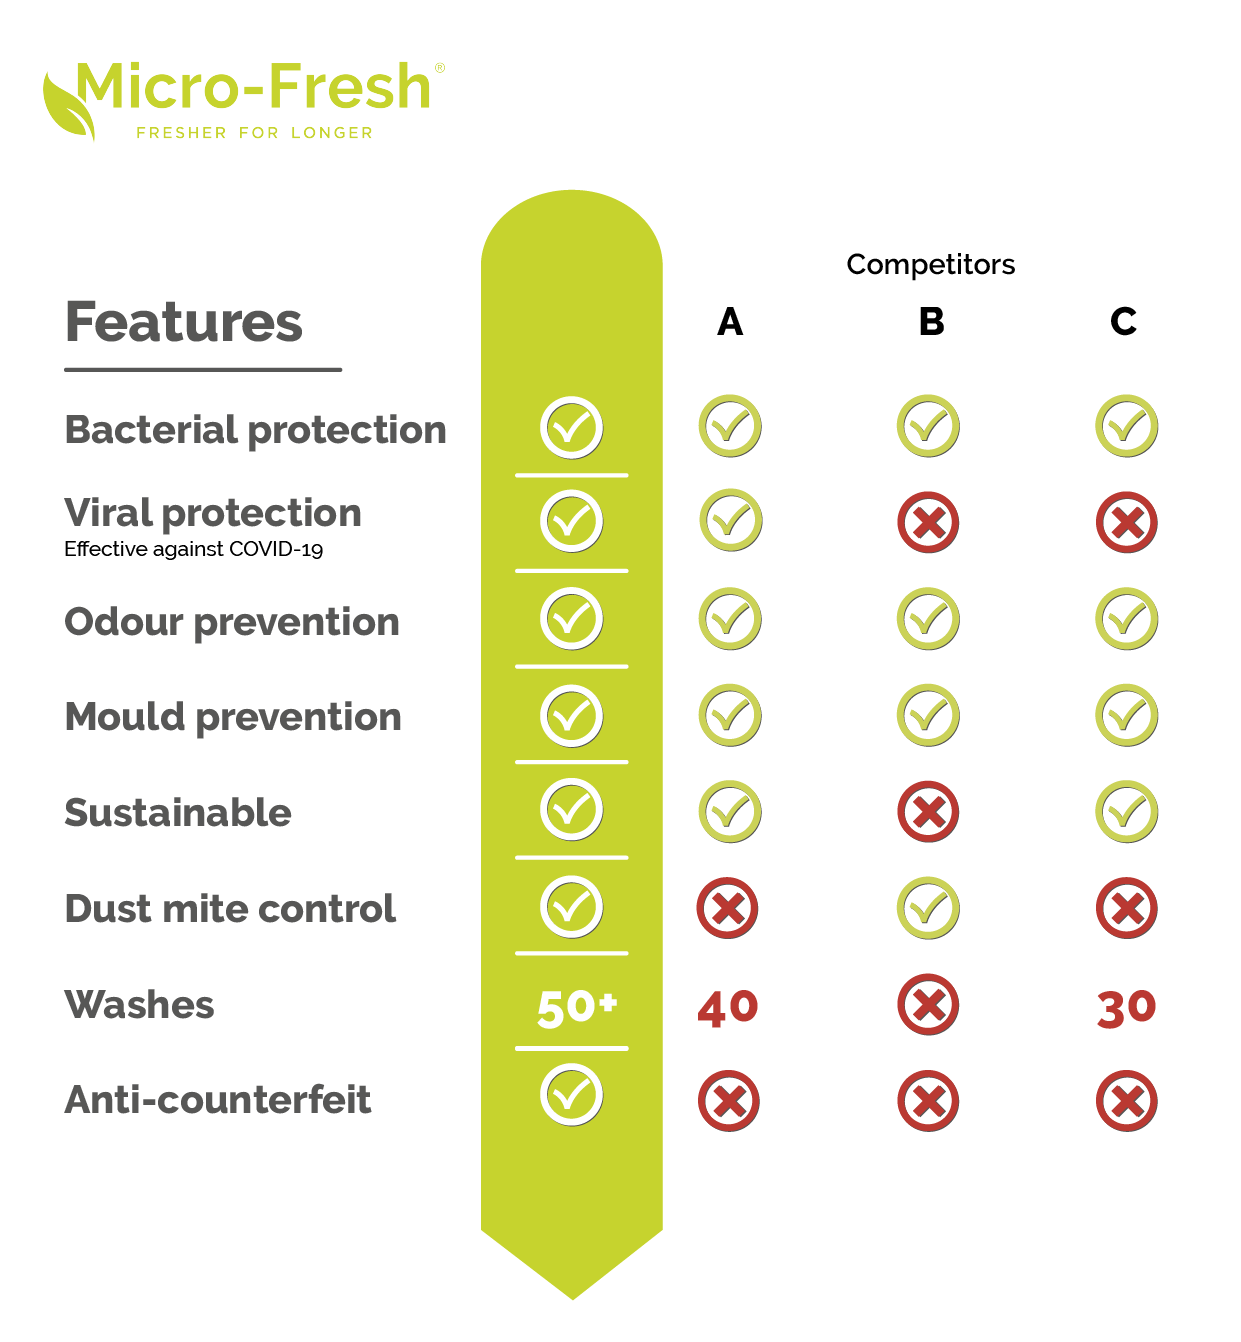 Micro-Fresh Competitors Grid